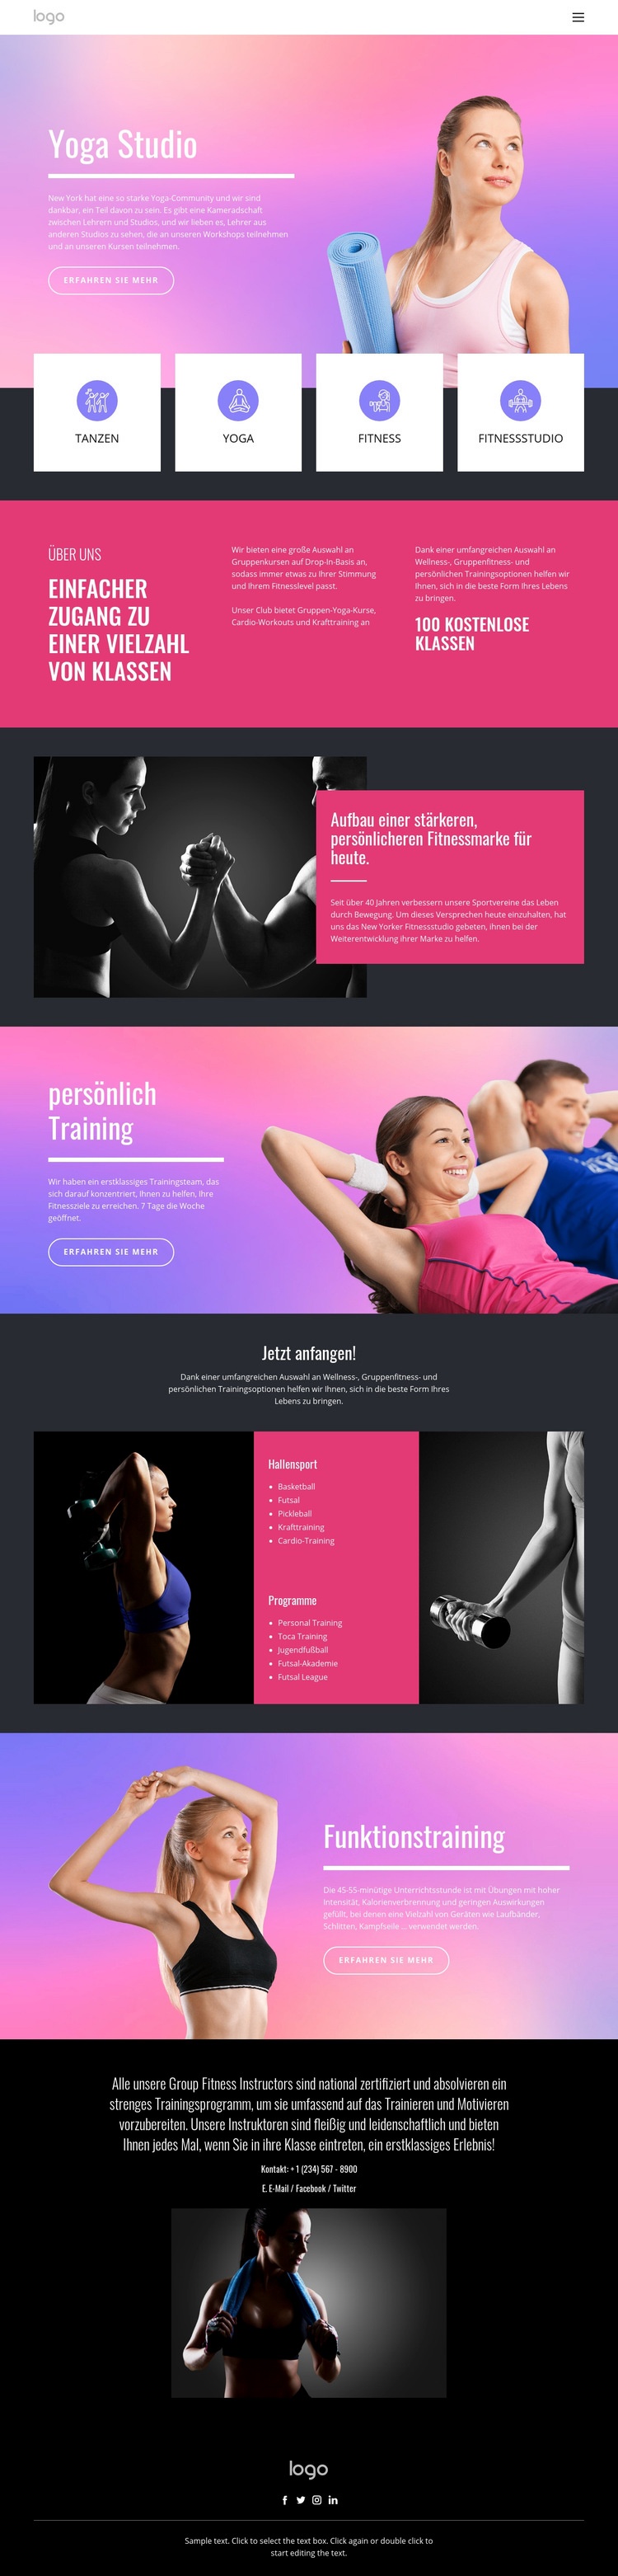 Yoga Studio und andere Sportarten Website design